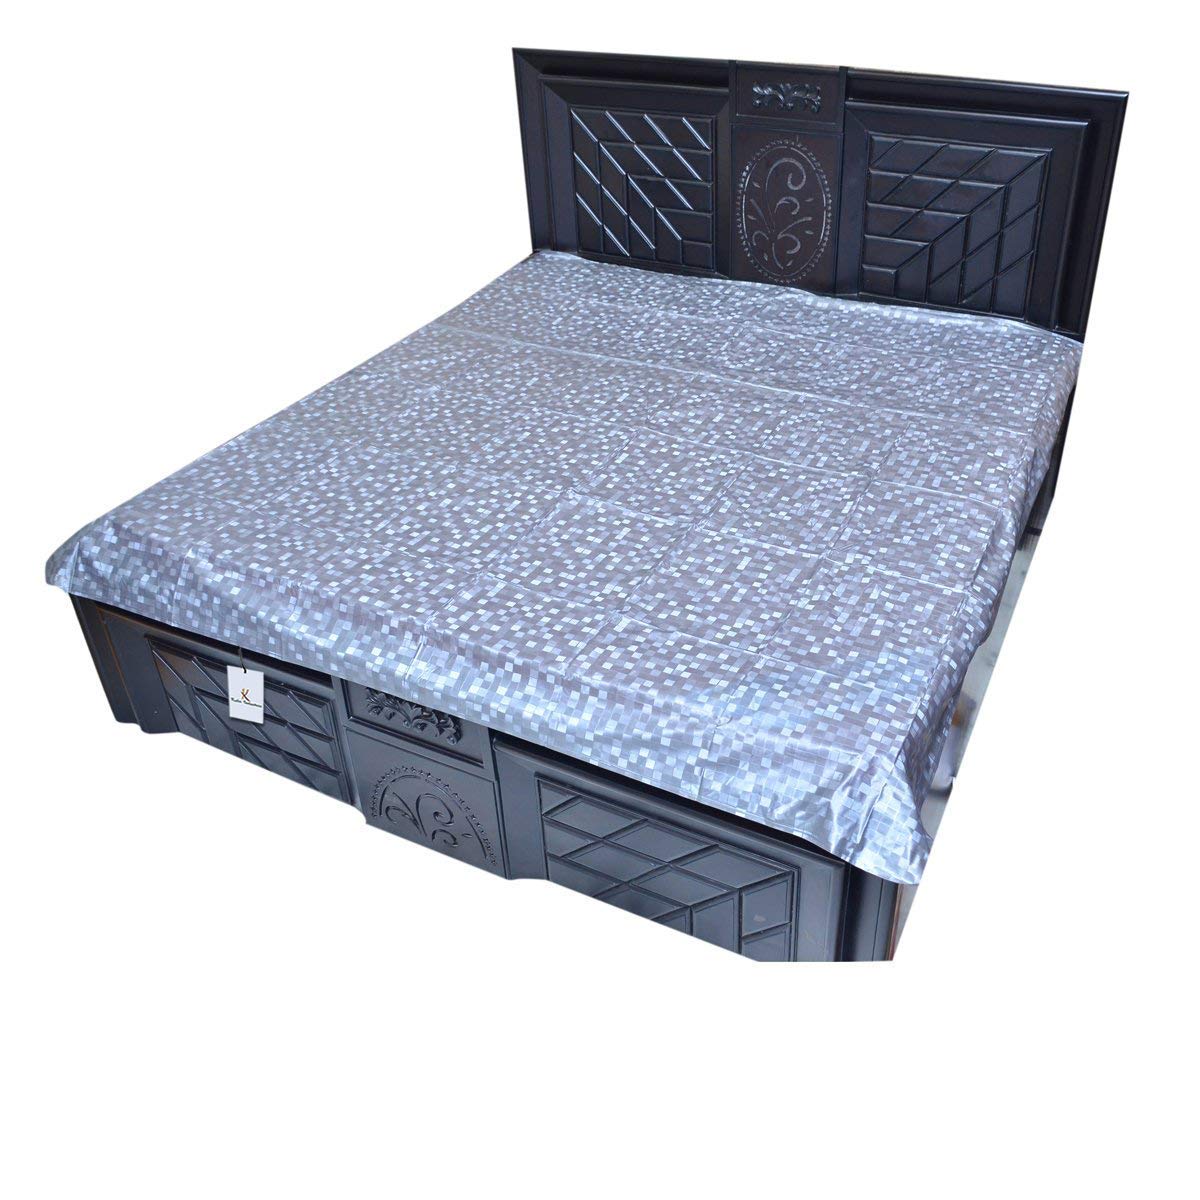 Kuber Industries PVC Double Bed Mattress Protector Sheet, Grey, 6.5 * 6 feet - CTKTC028743